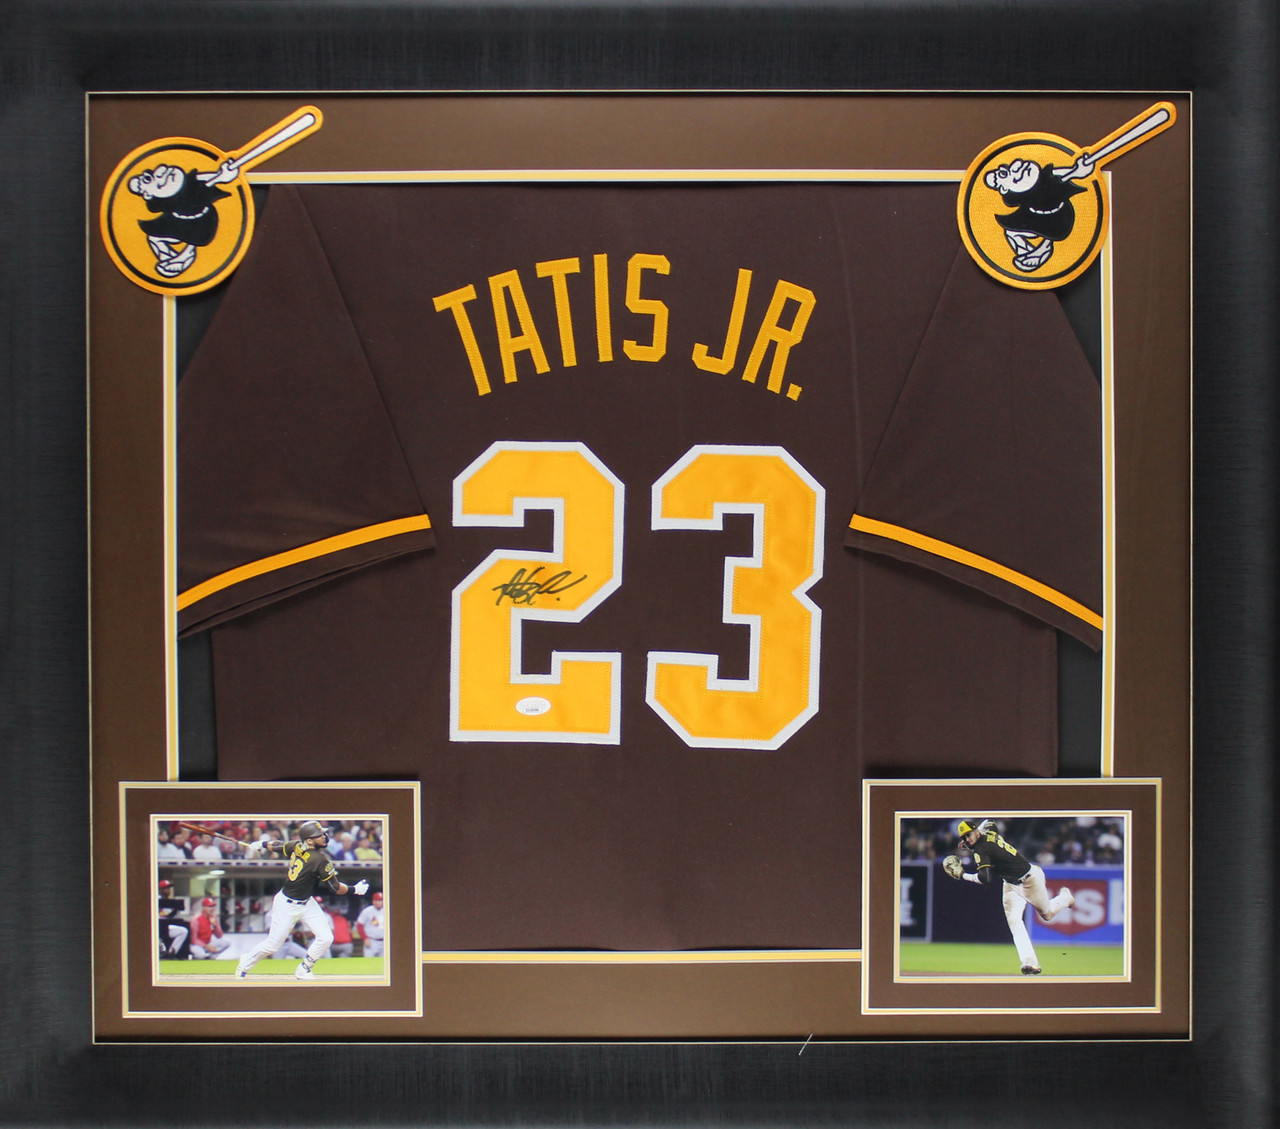 Fernando Tatis Jr. Signed Custom White Pro Style Baseball Jersey JSA